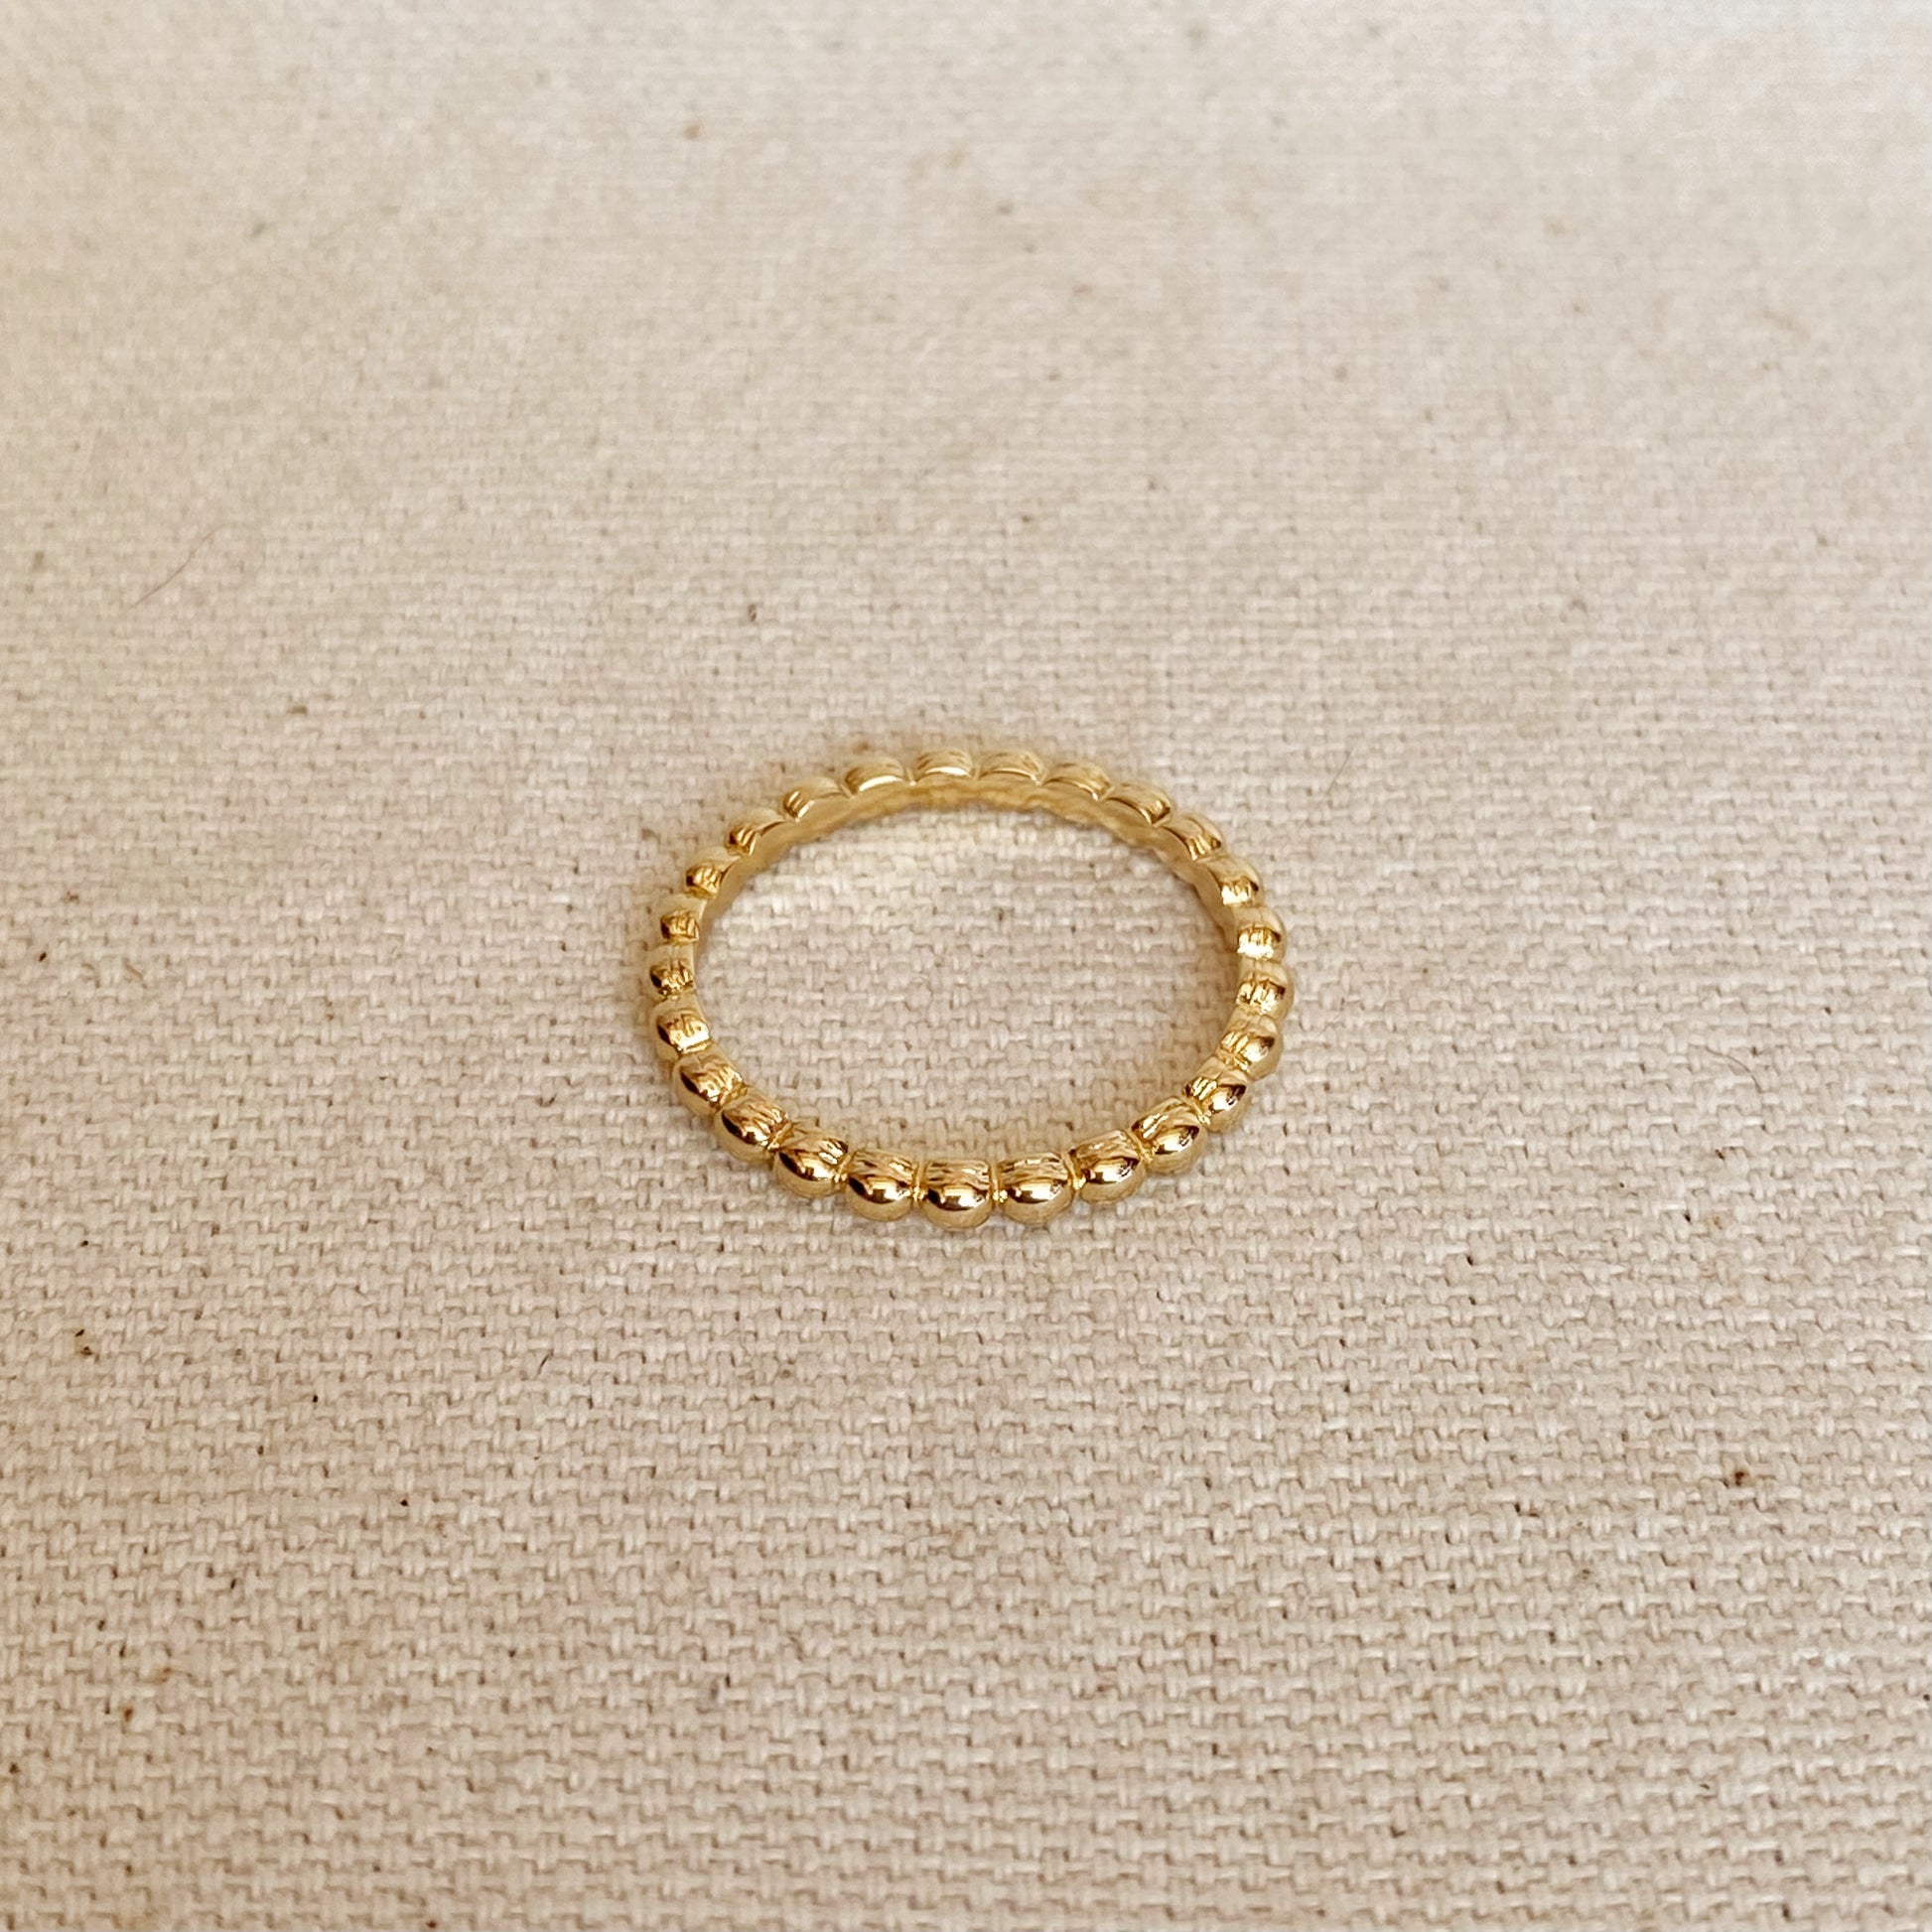 GoldFi 18k Gold Filled Beaded Band Ring